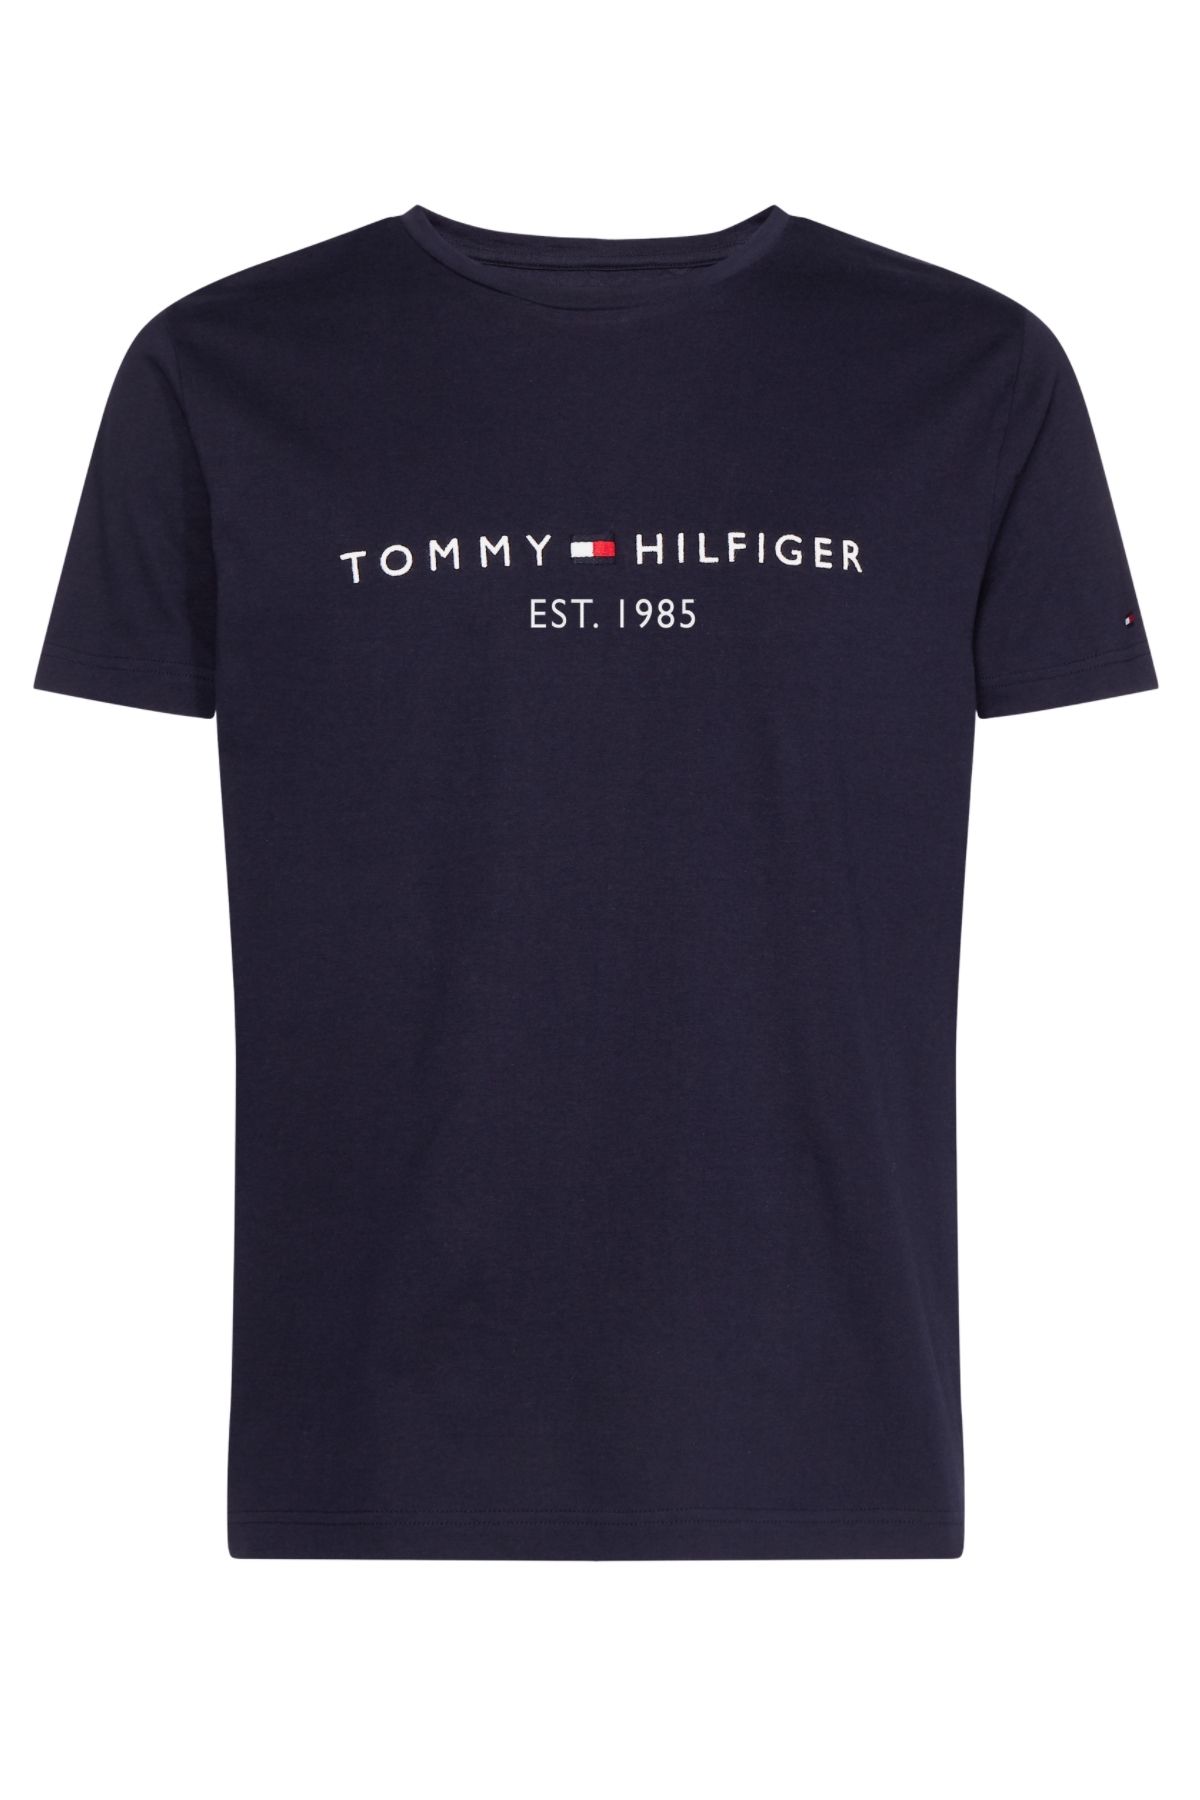 Tommy Hilfiger Erkek Marka Logolu Gündelik Kullanıma Uygun Organik Pamuklu Lacivert T-shirt Mw0mw11465403-lacivert